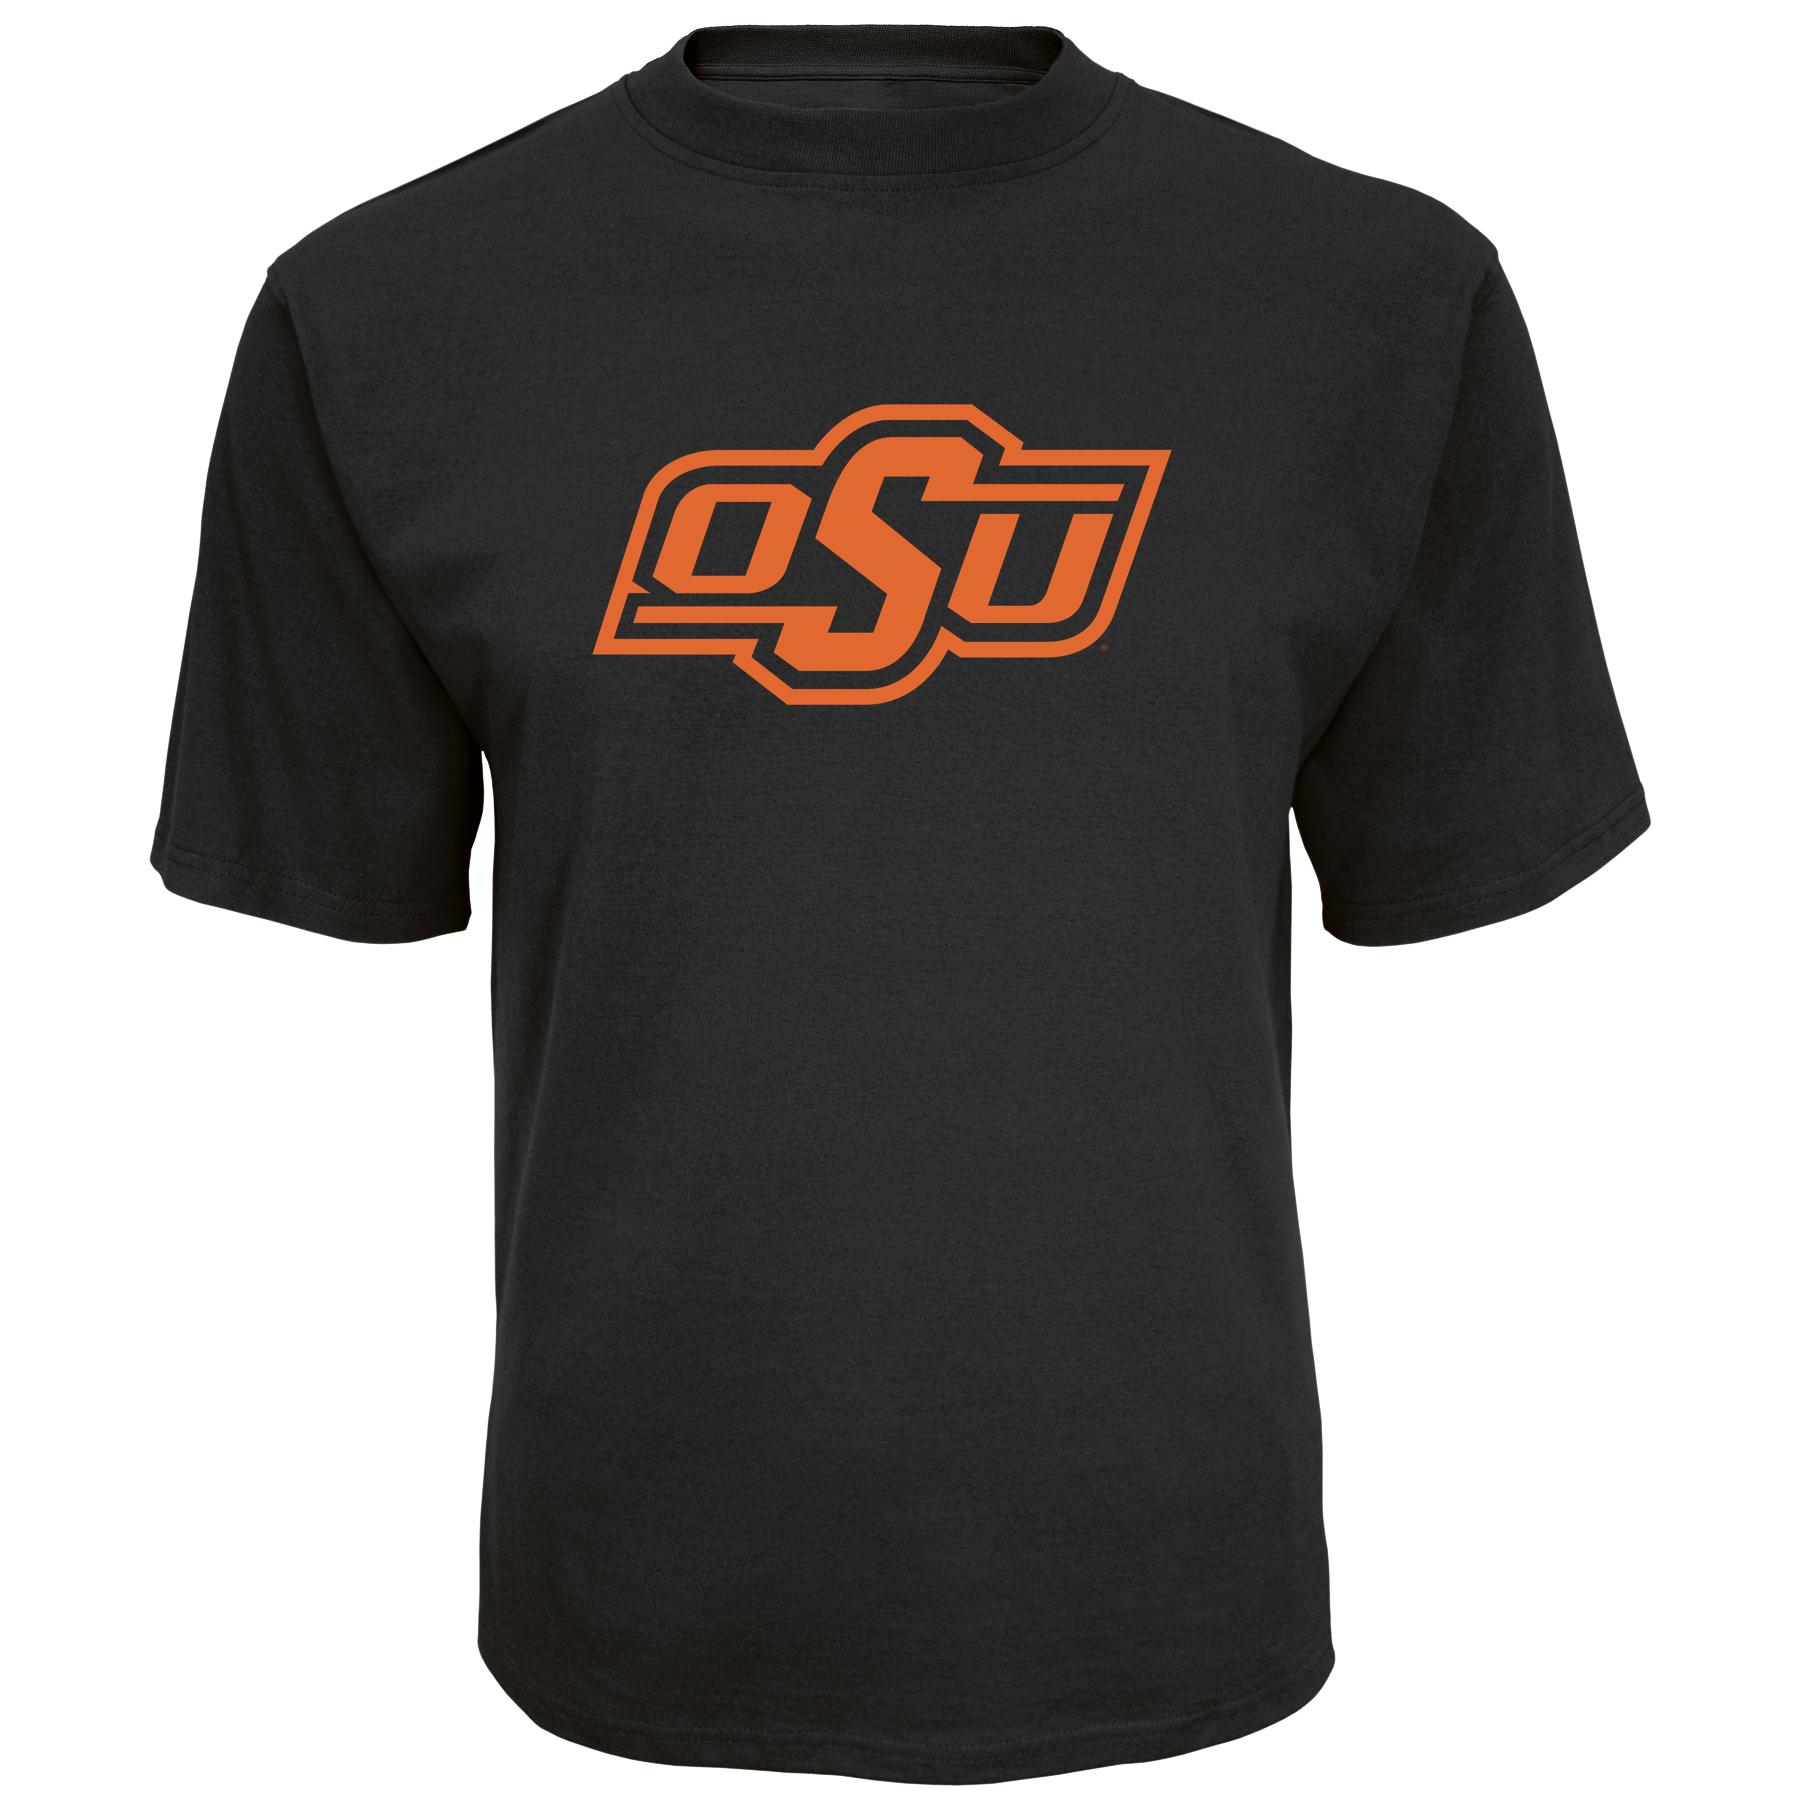 NCAA Men's Graphic T-Shirt - Oklahoma State Cowboys